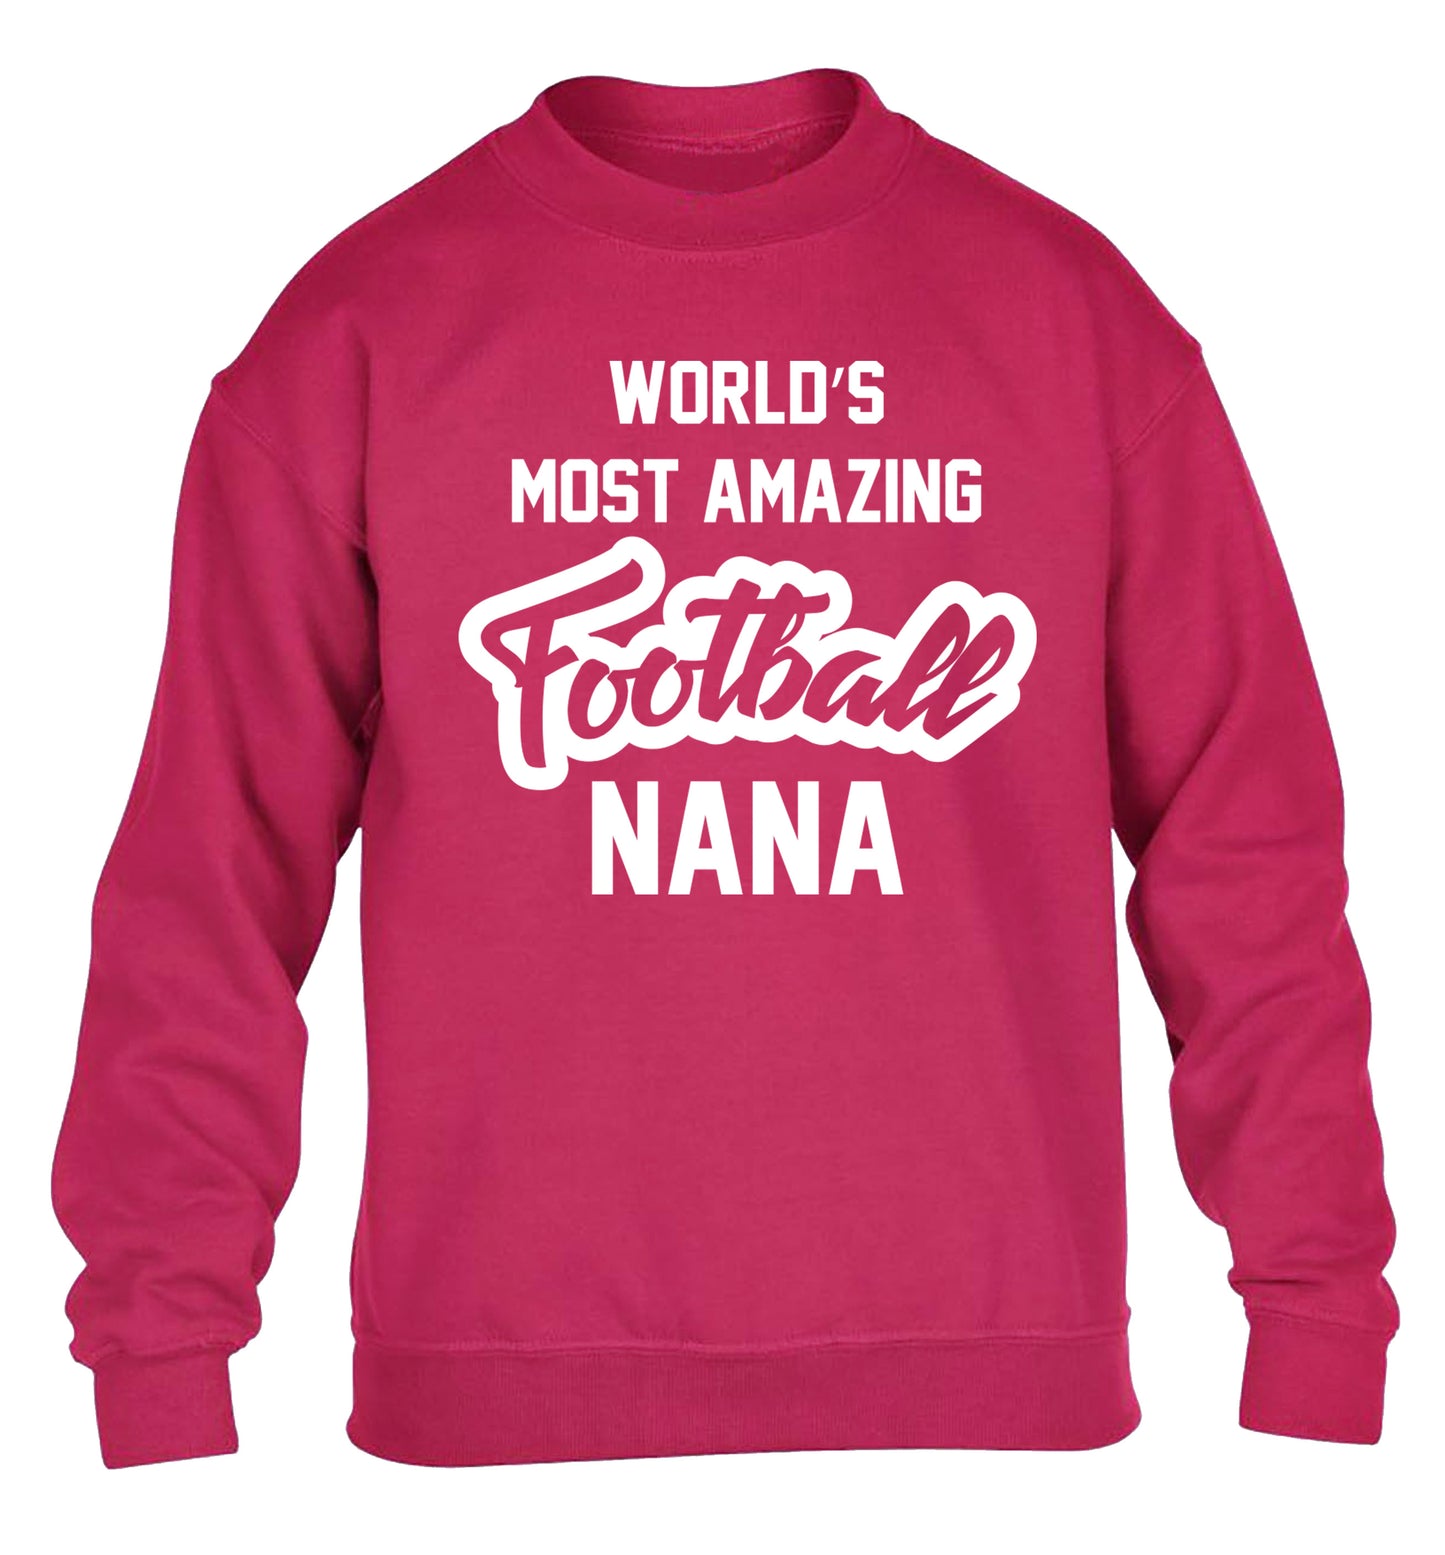 Worlds most amazing football nana children's pink sweater 12-14 Years